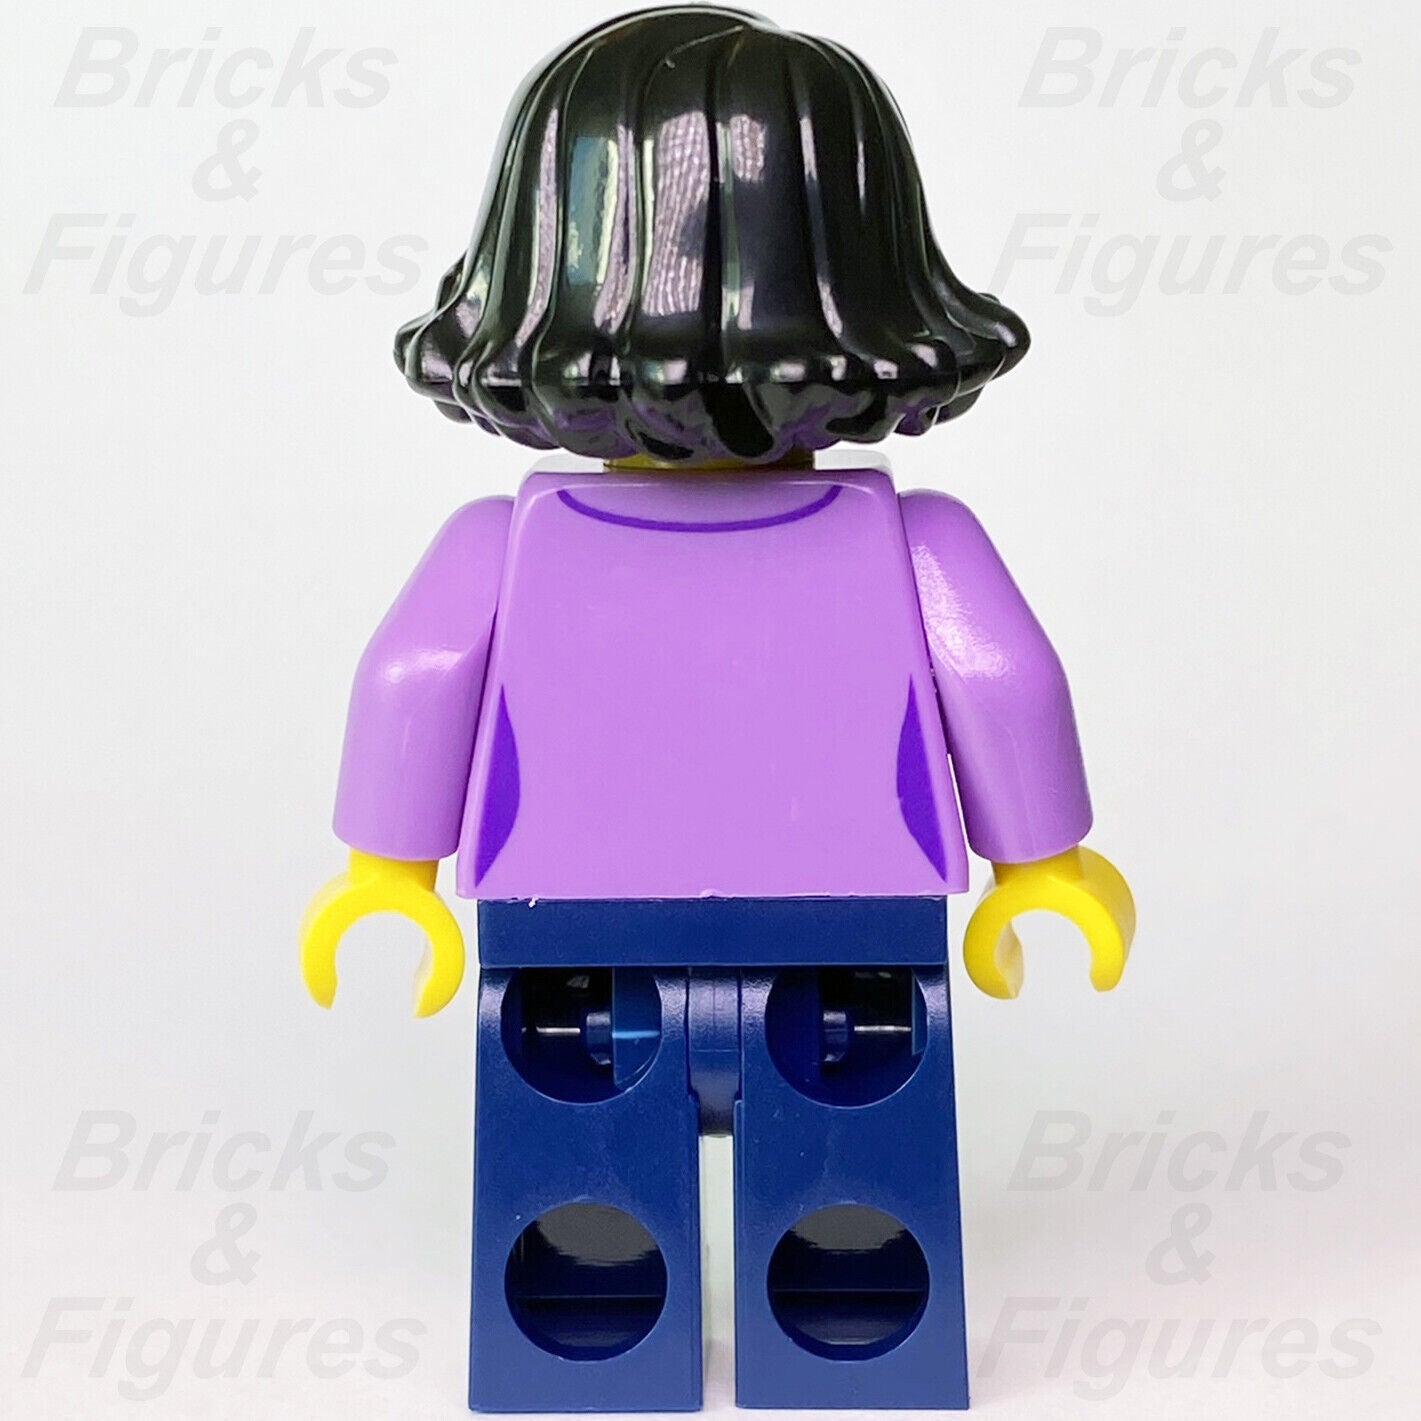 New Town City LEGO Mum with Purple Jacket Building Minifigure 60291 cty1234 - Bricks & Figures